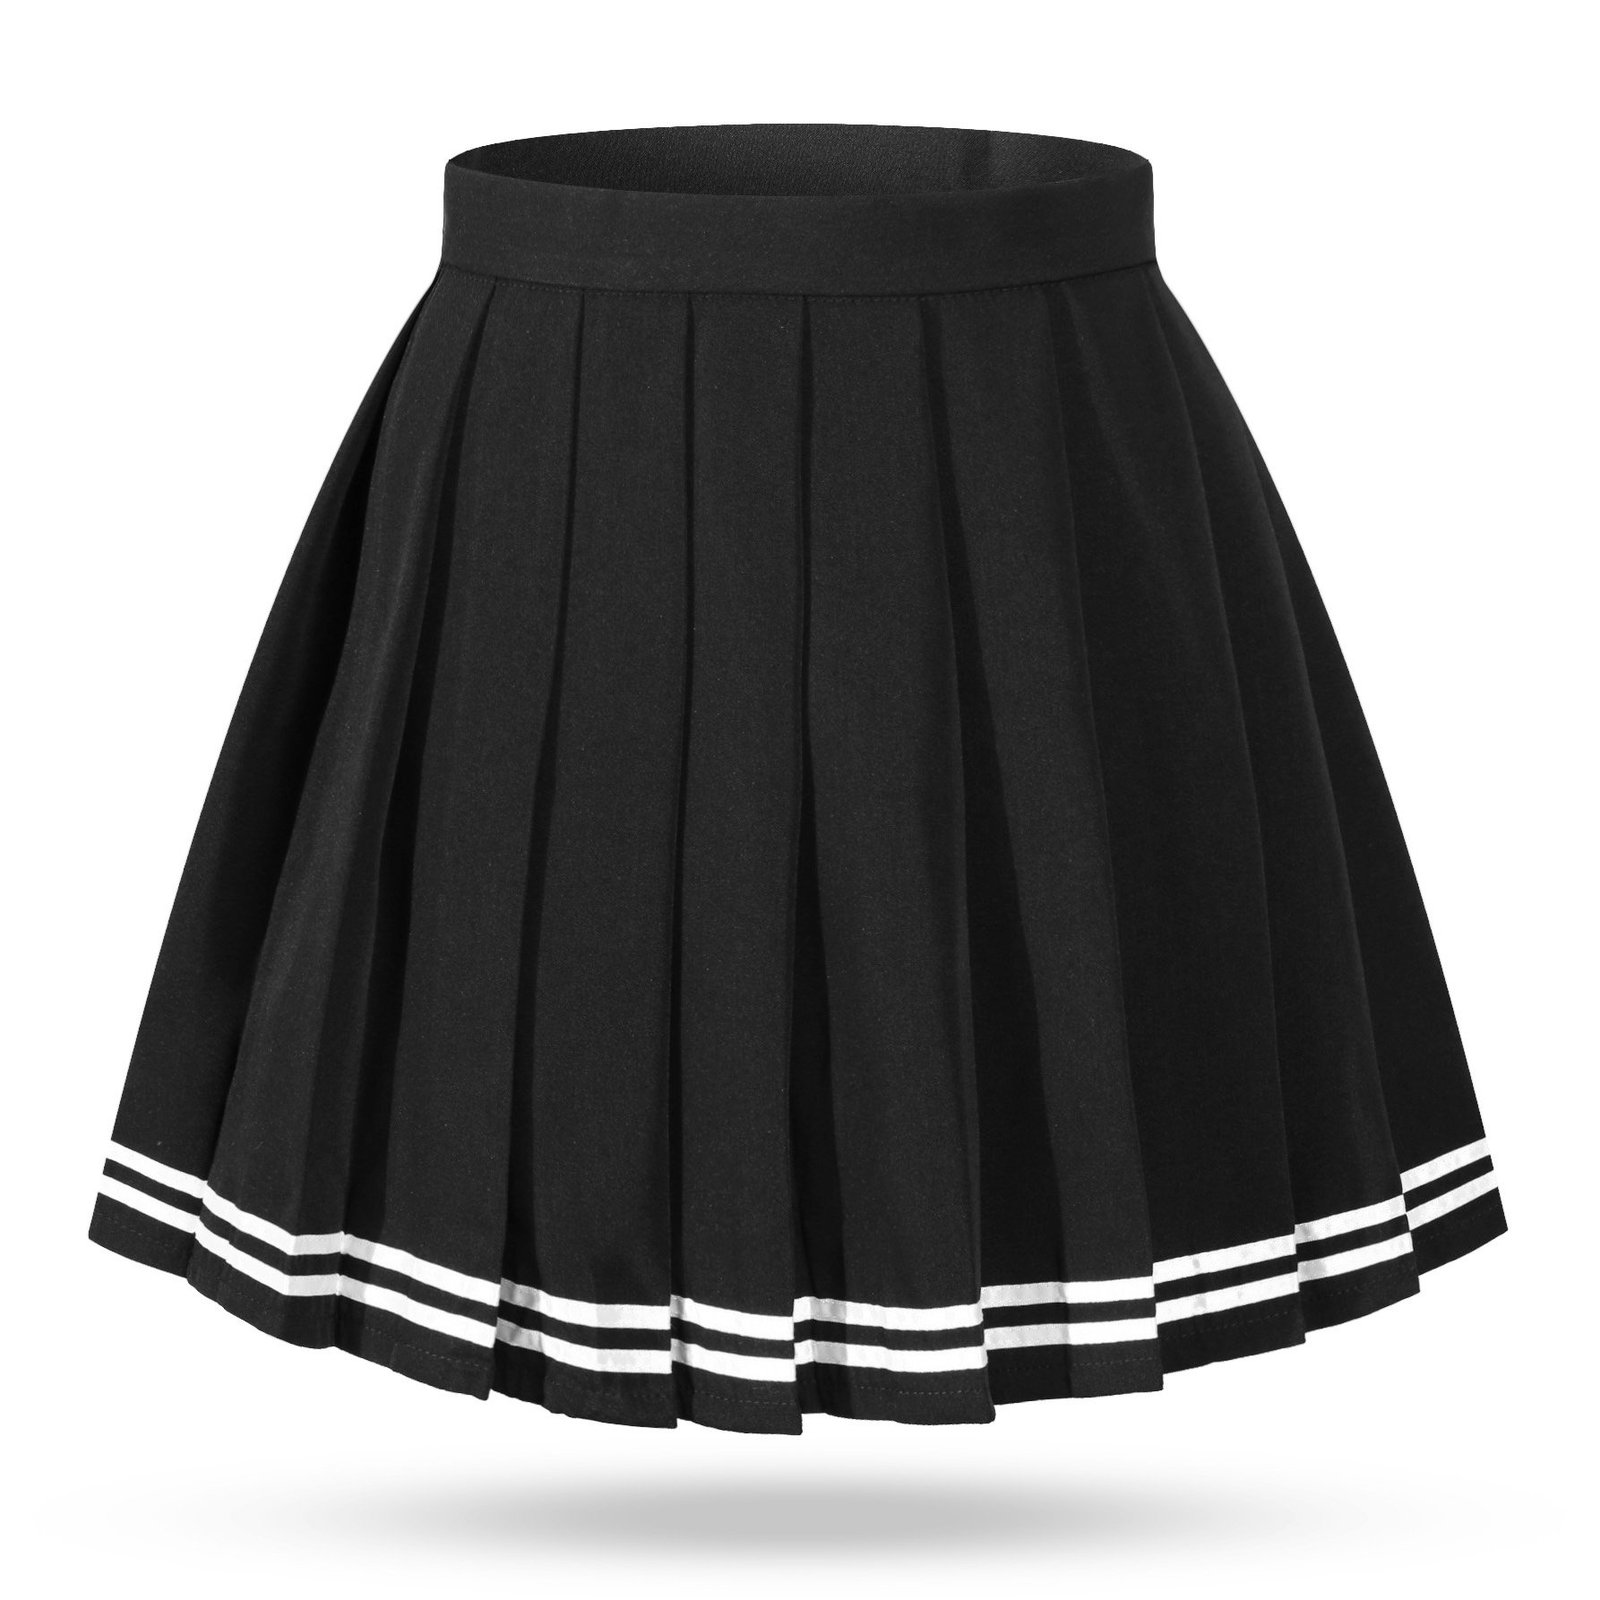 Women's Pleated School Navy clothing Skirts Costumes(2XL,Black White Stripe)